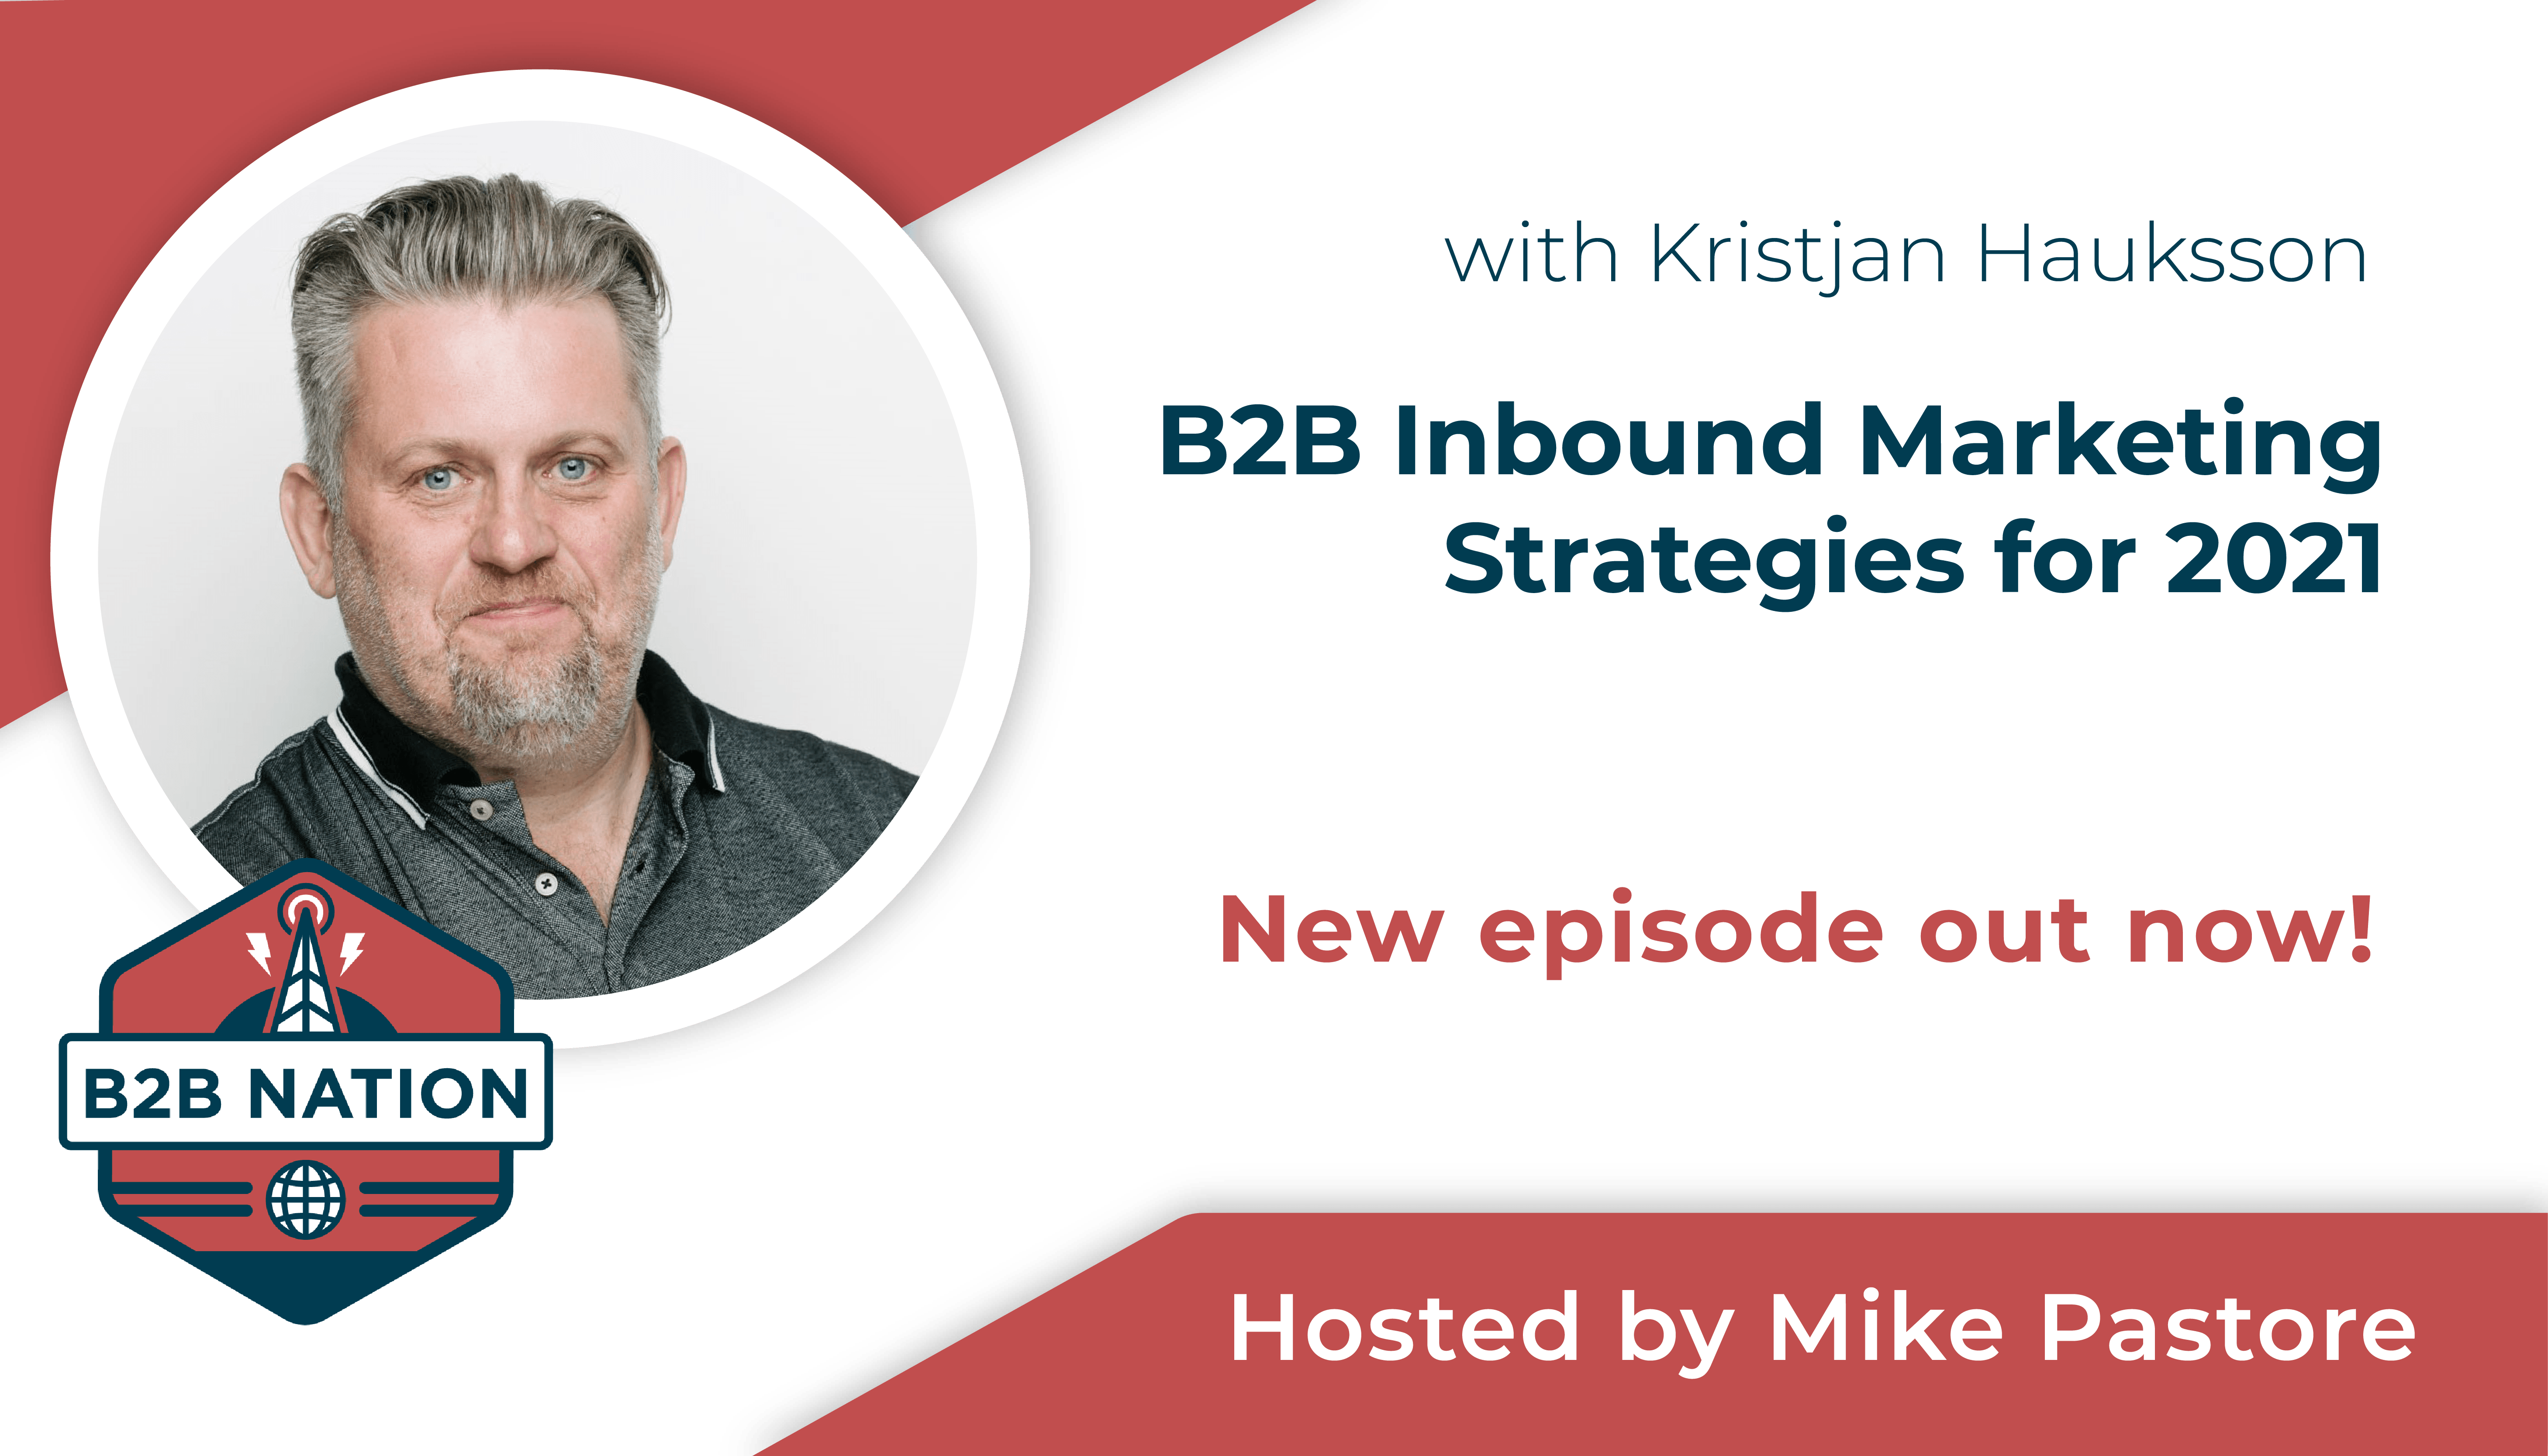 B2B inbound marketing strategies for 2021 with Kristjan Hauksson.